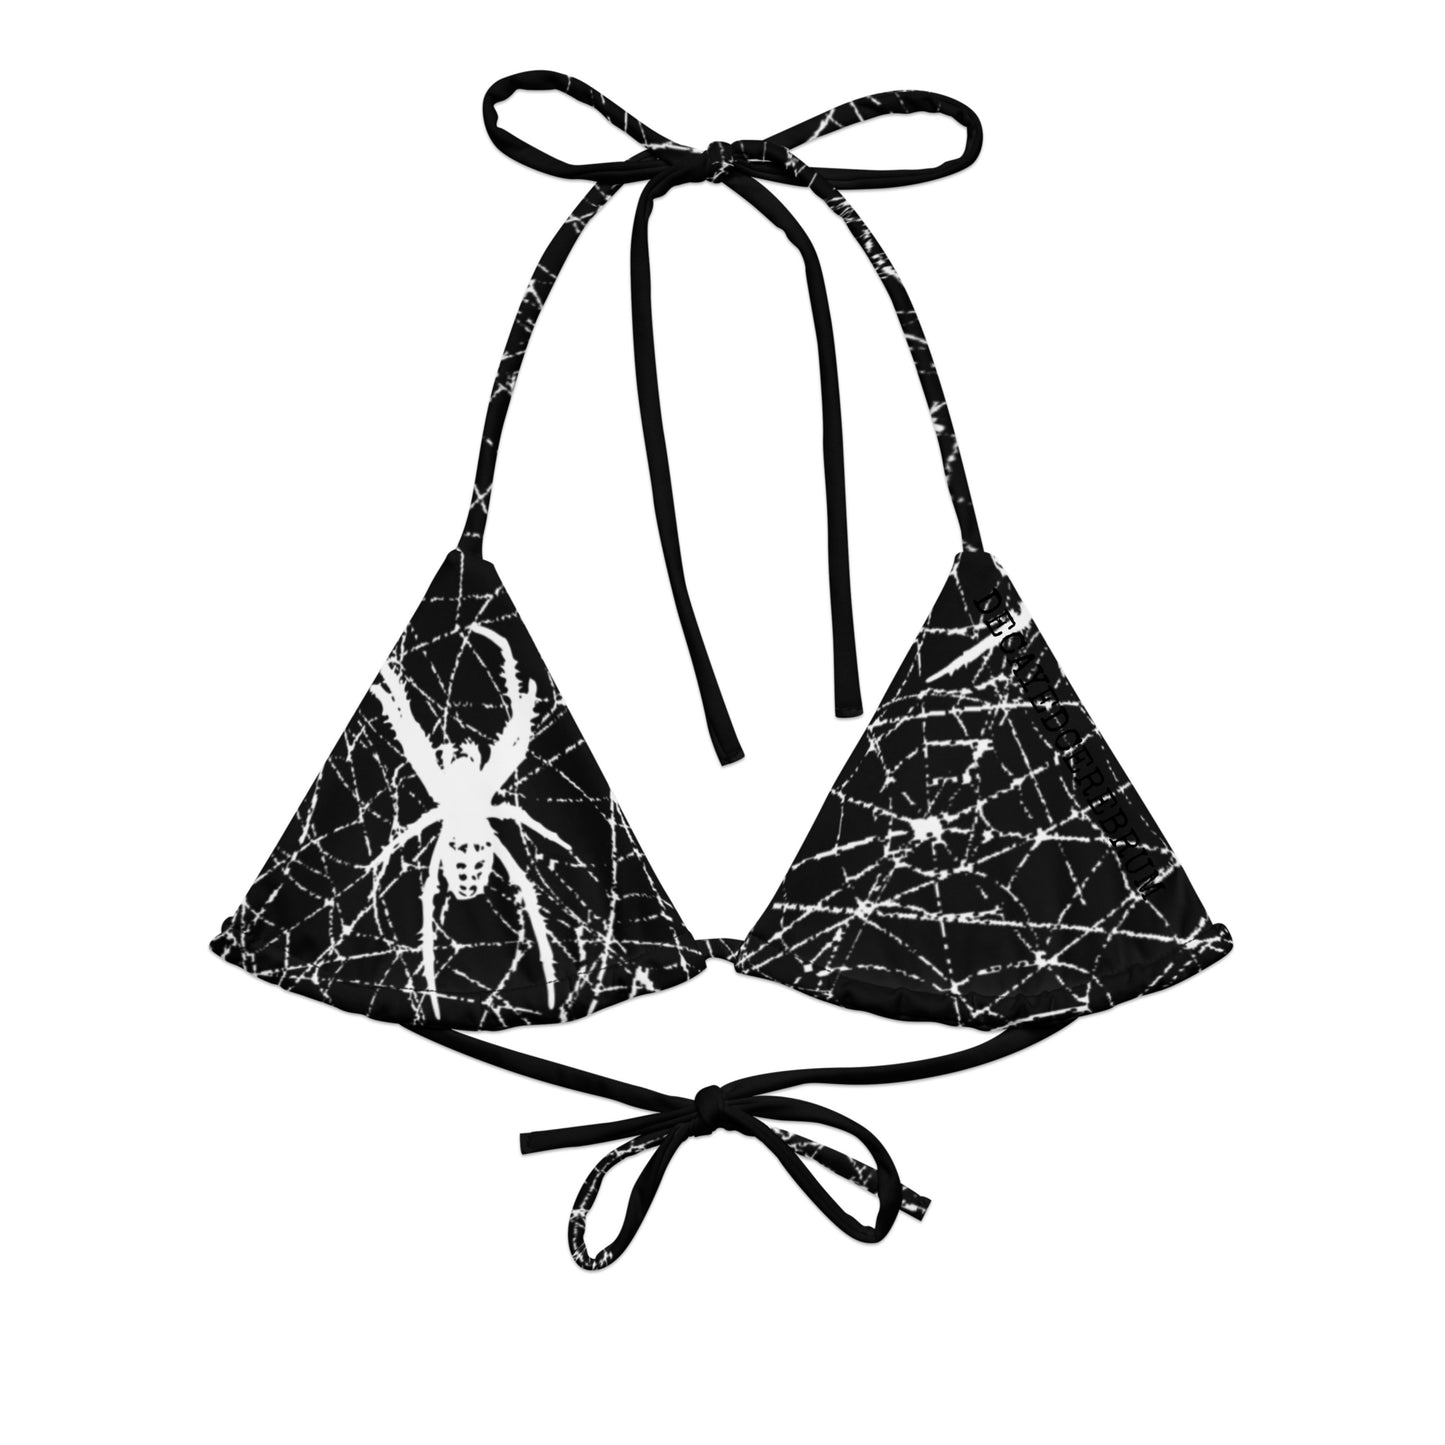 Spider web bikini top